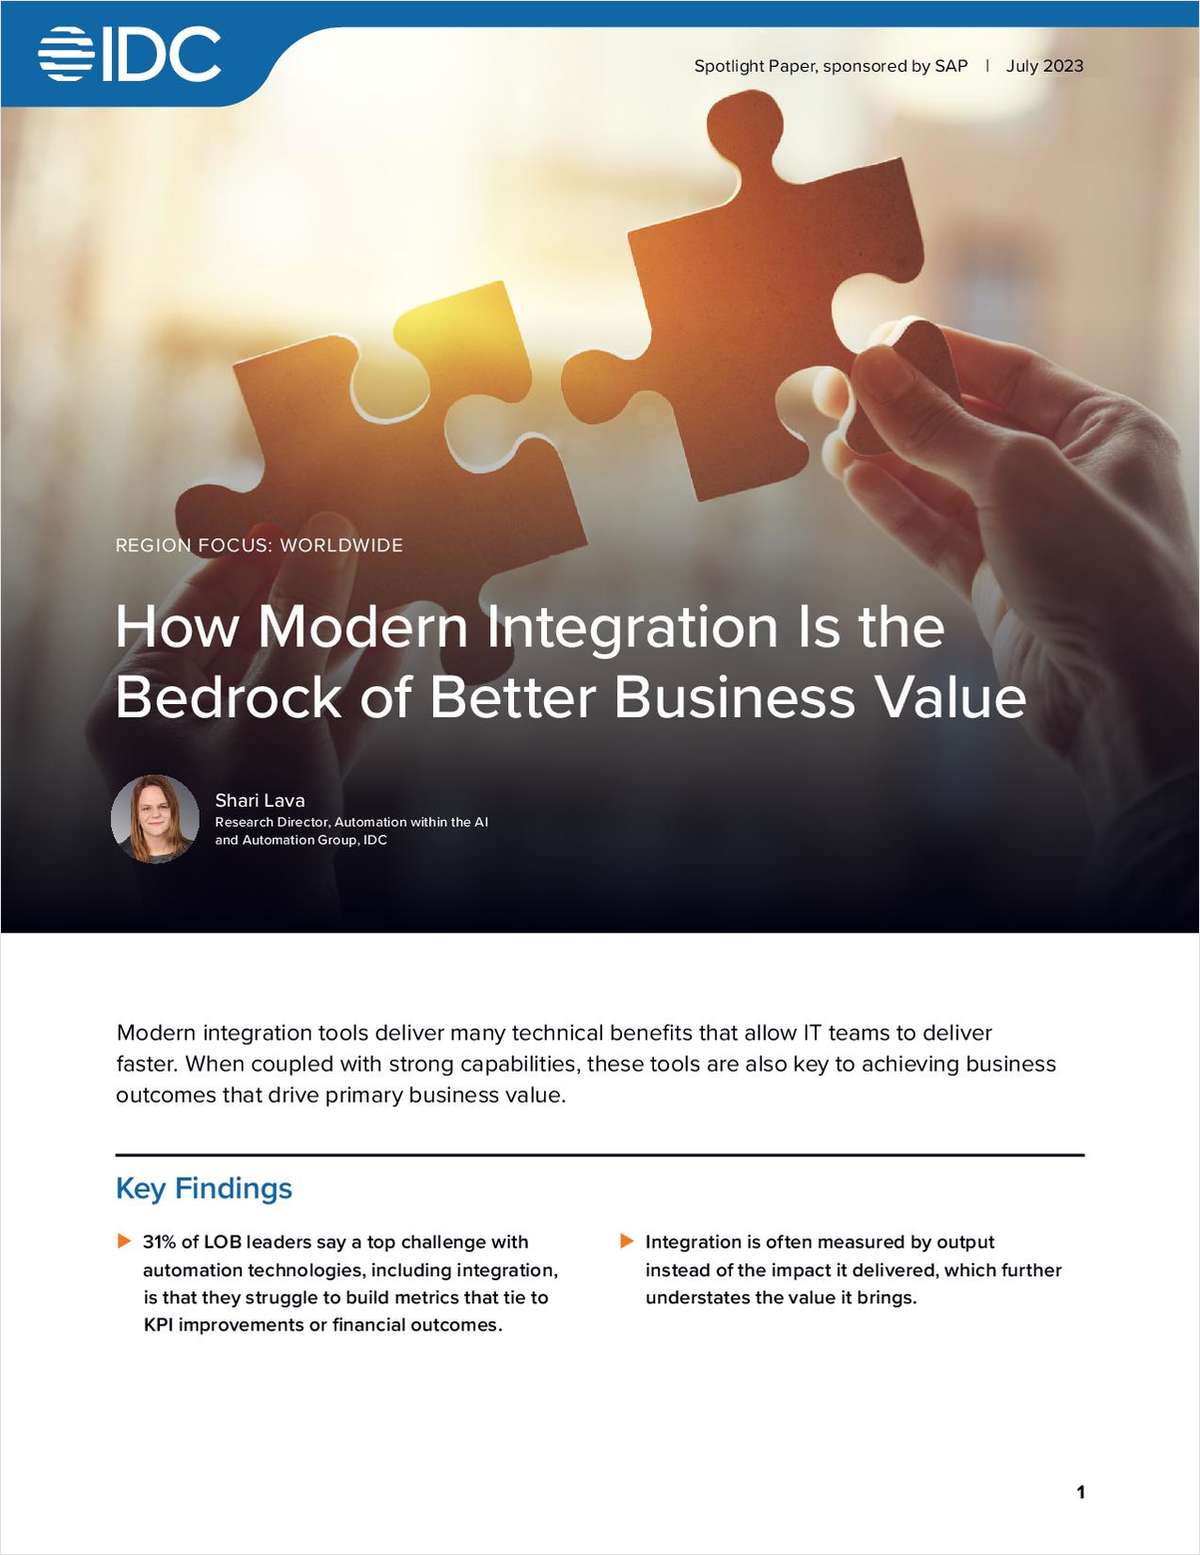 IDC Spotlight: How Modern Integration is the Bedrock of Better Business Value